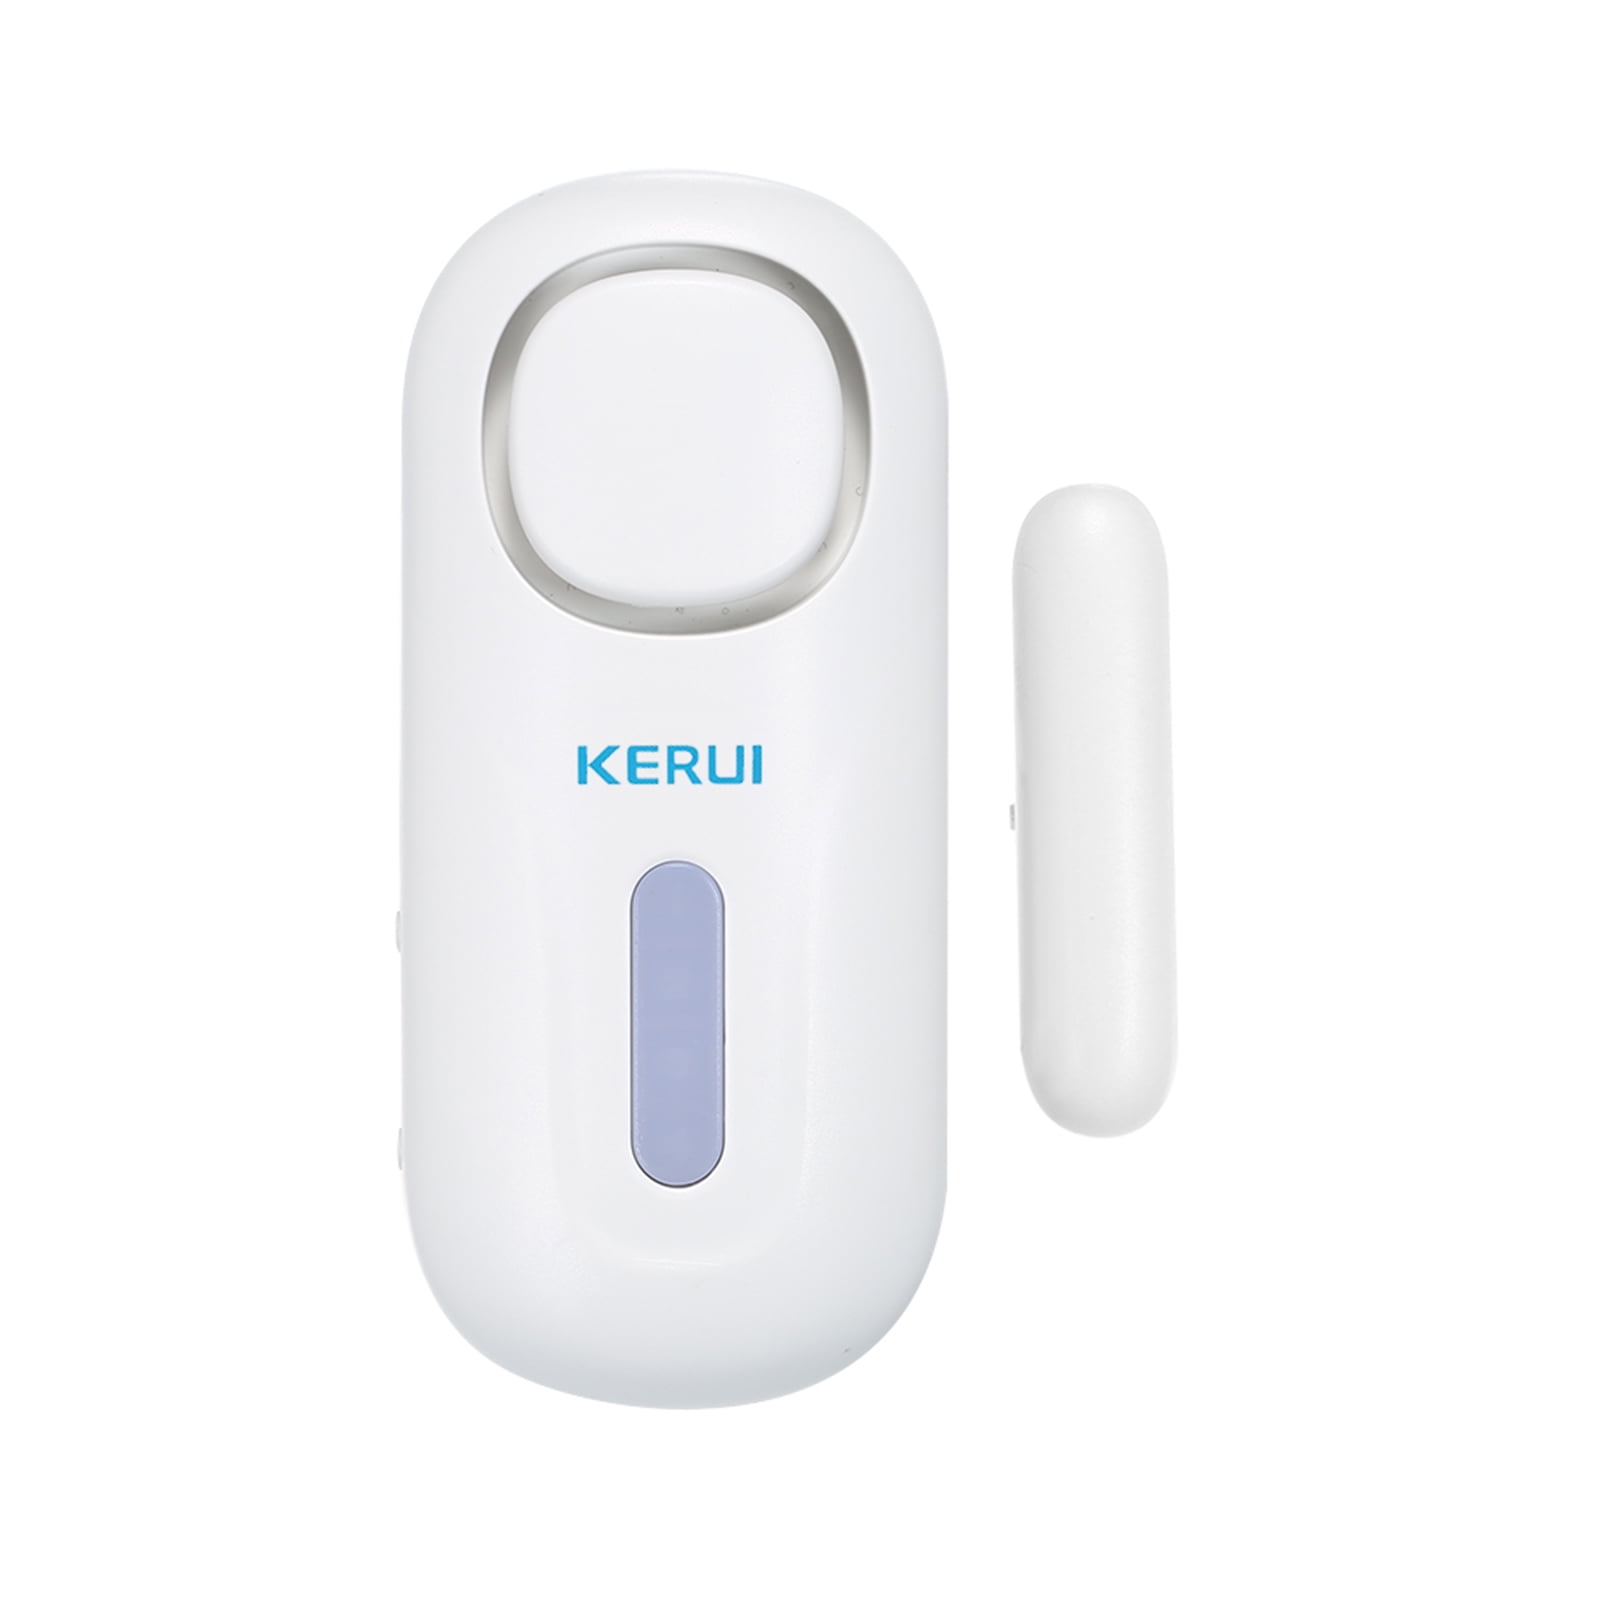 KERUI Remote Control Wireless Door Entry Security Burglar Alarm Magnetic Sensor